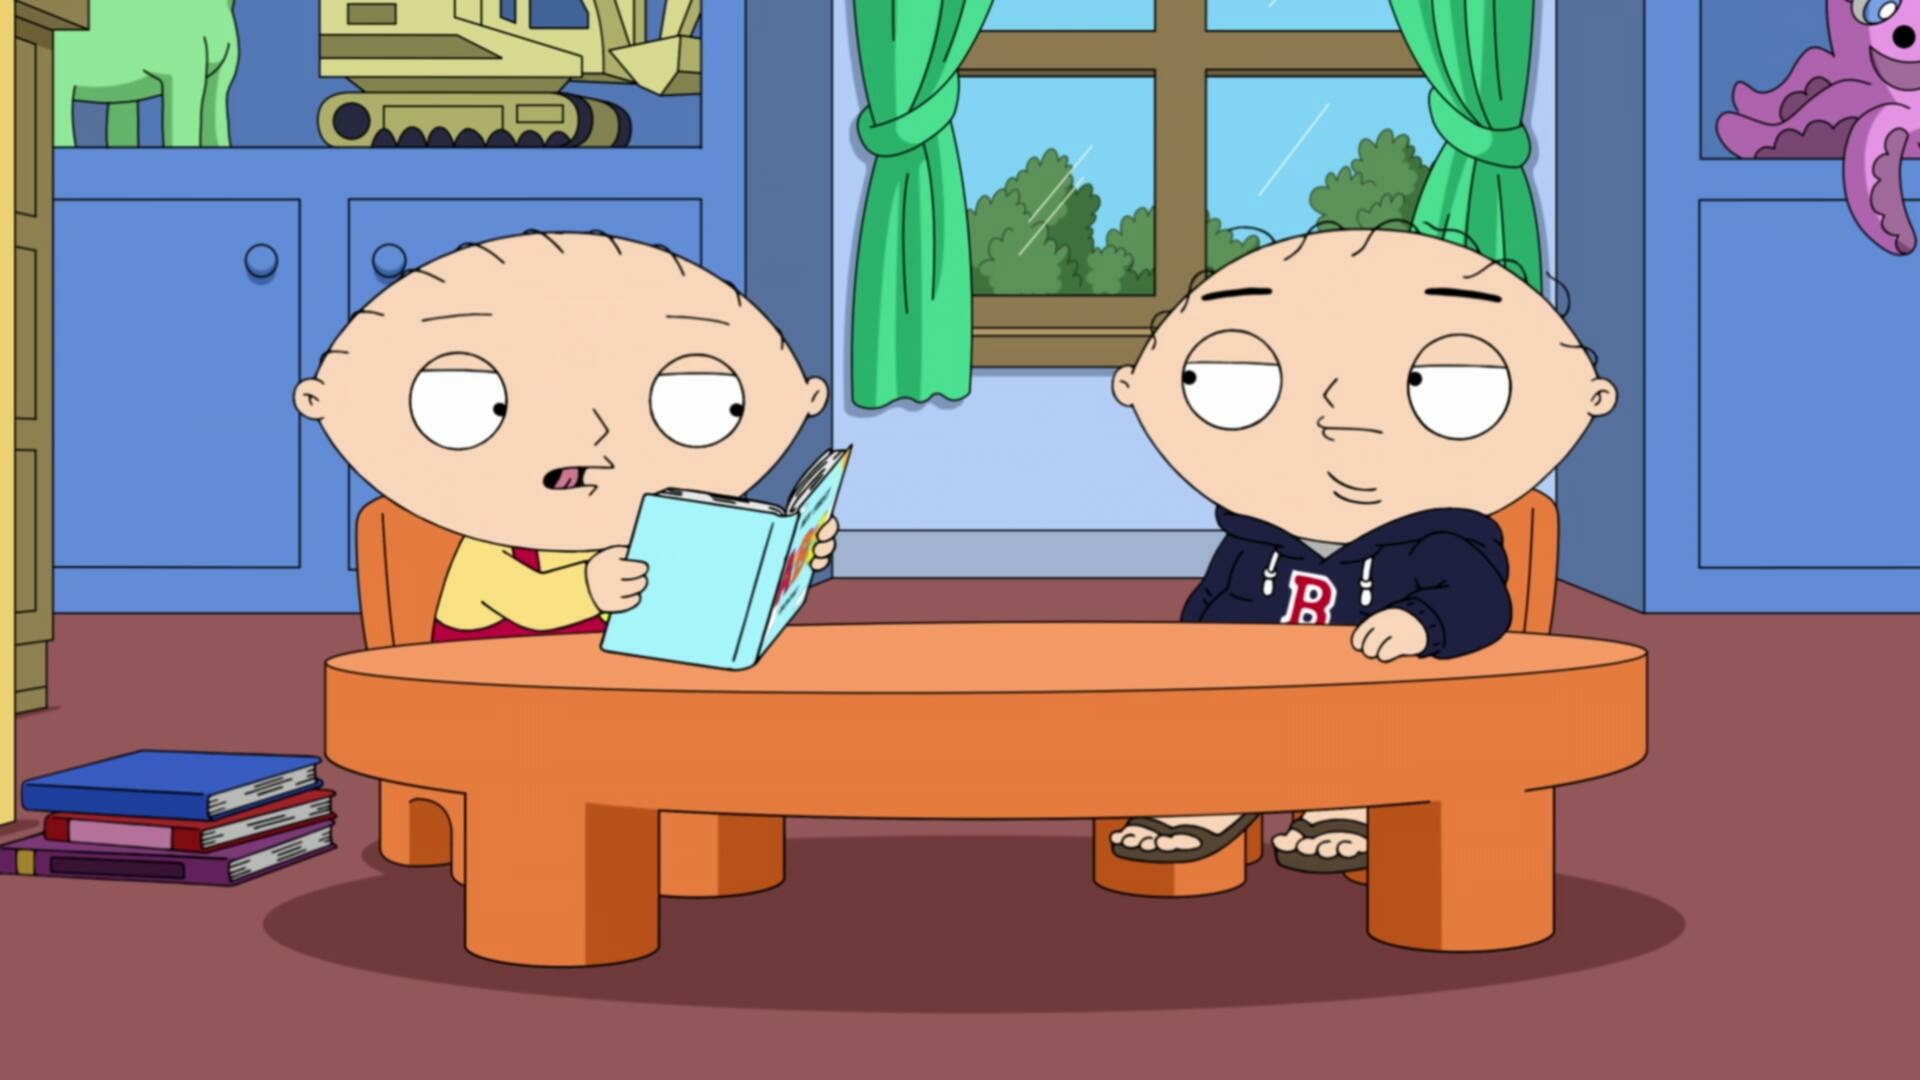 Family Guy S22E06 Boston Stewie 1080p HULU WEB DL DDP5 1 H 264 NTb TGx